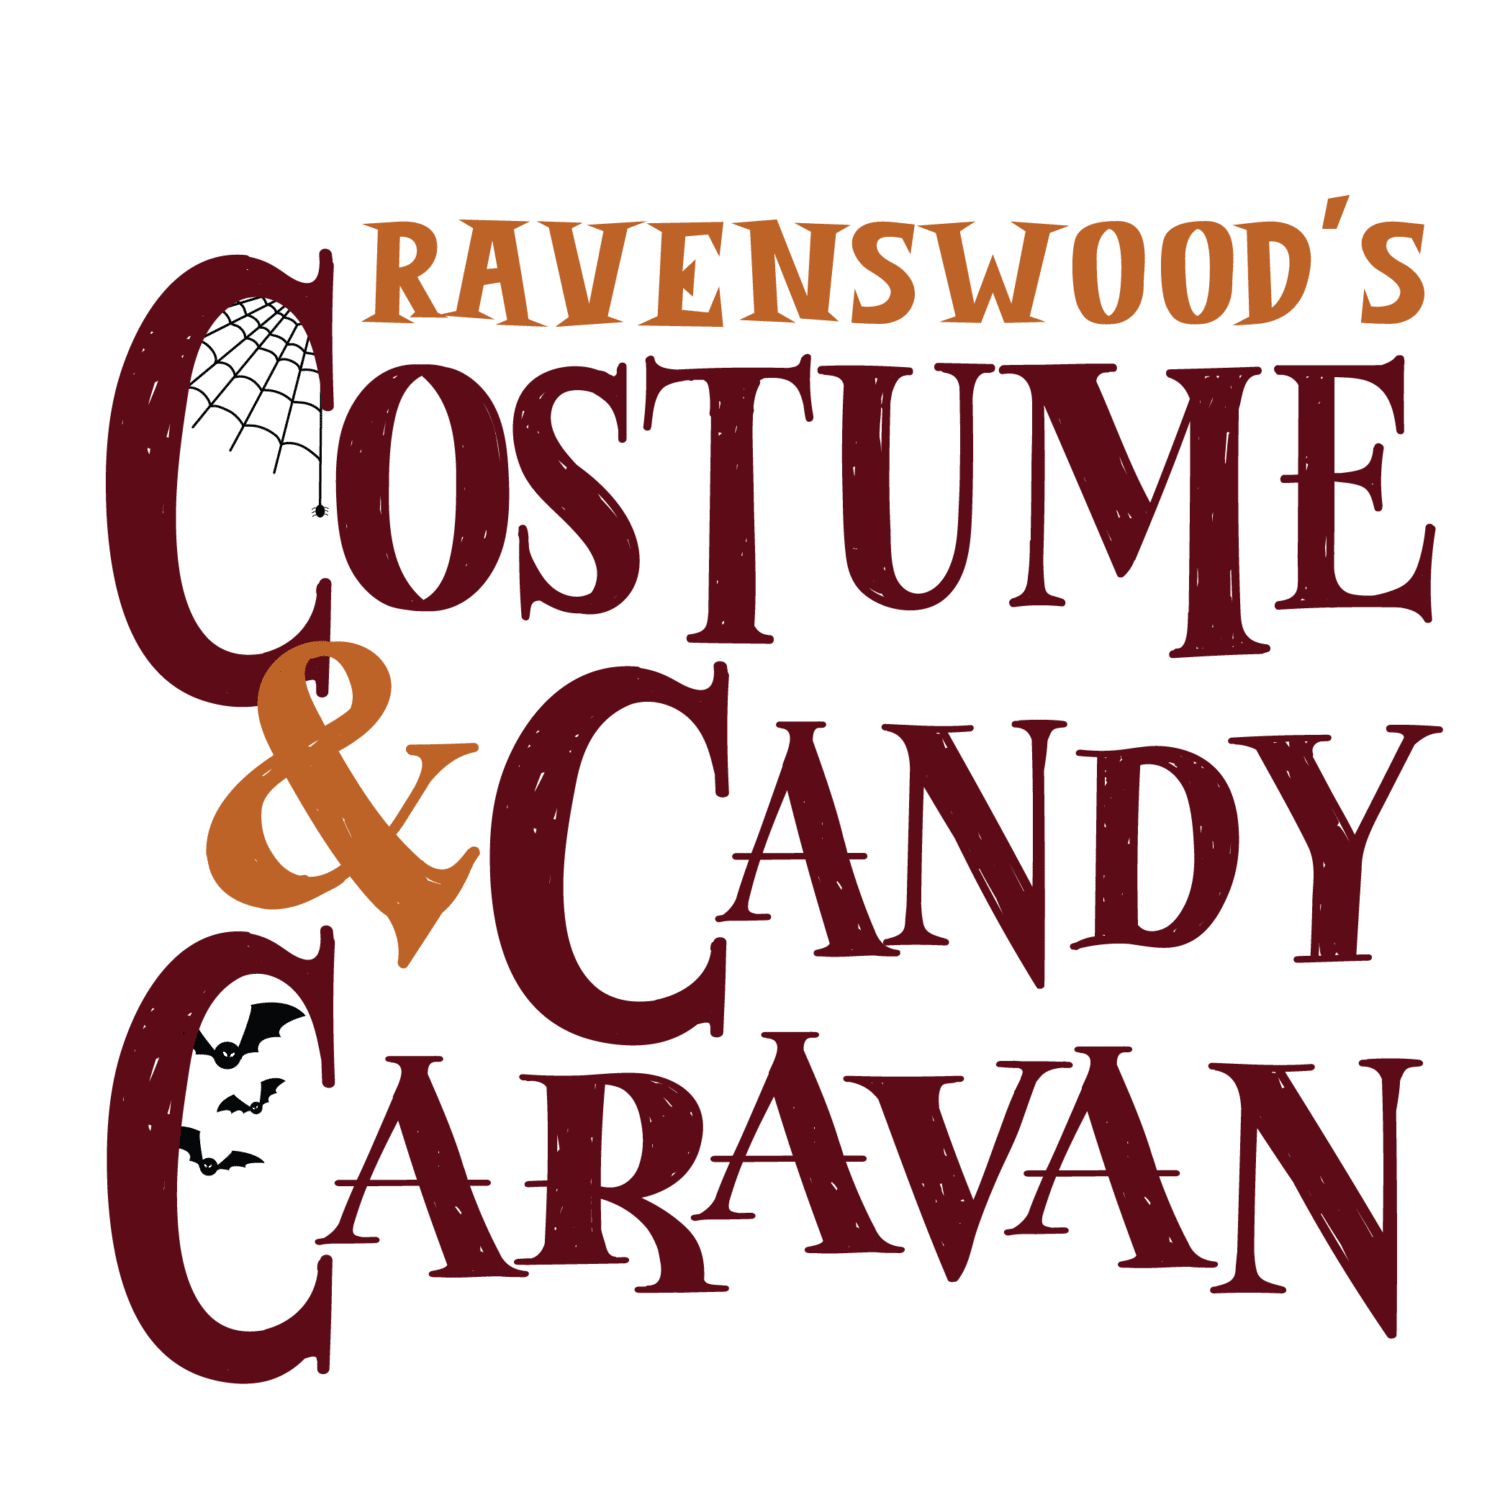 Ravenswood's Costume & Candy Caravan Logo